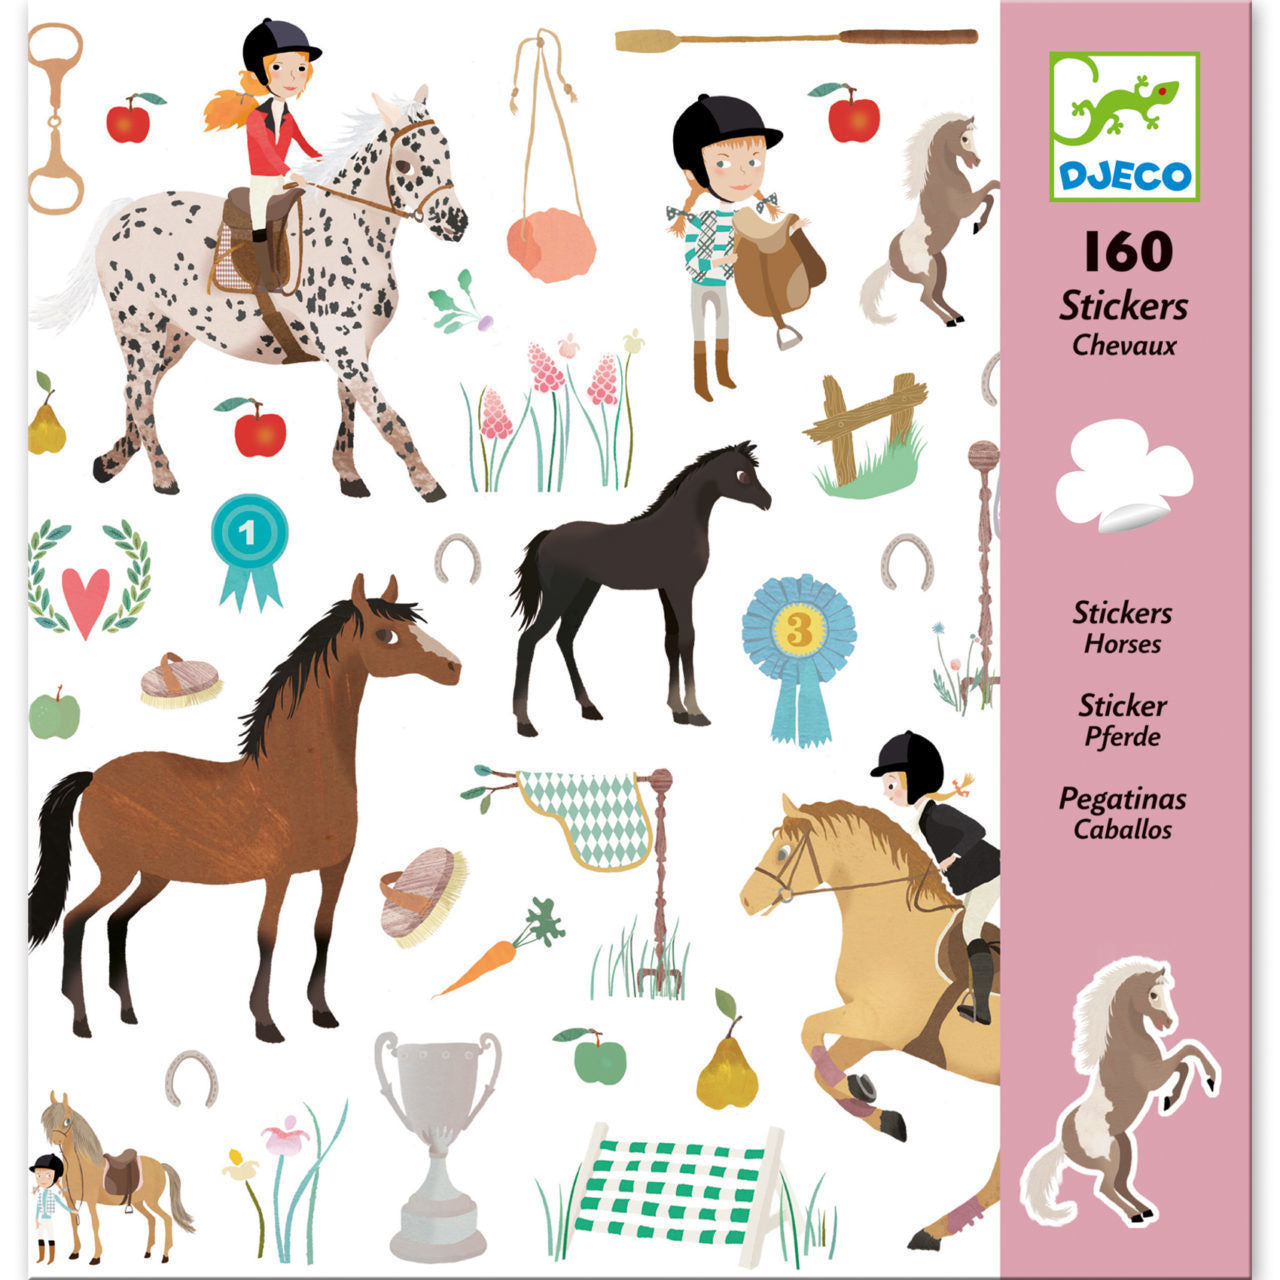 djeco-sticker-collection-horses-1